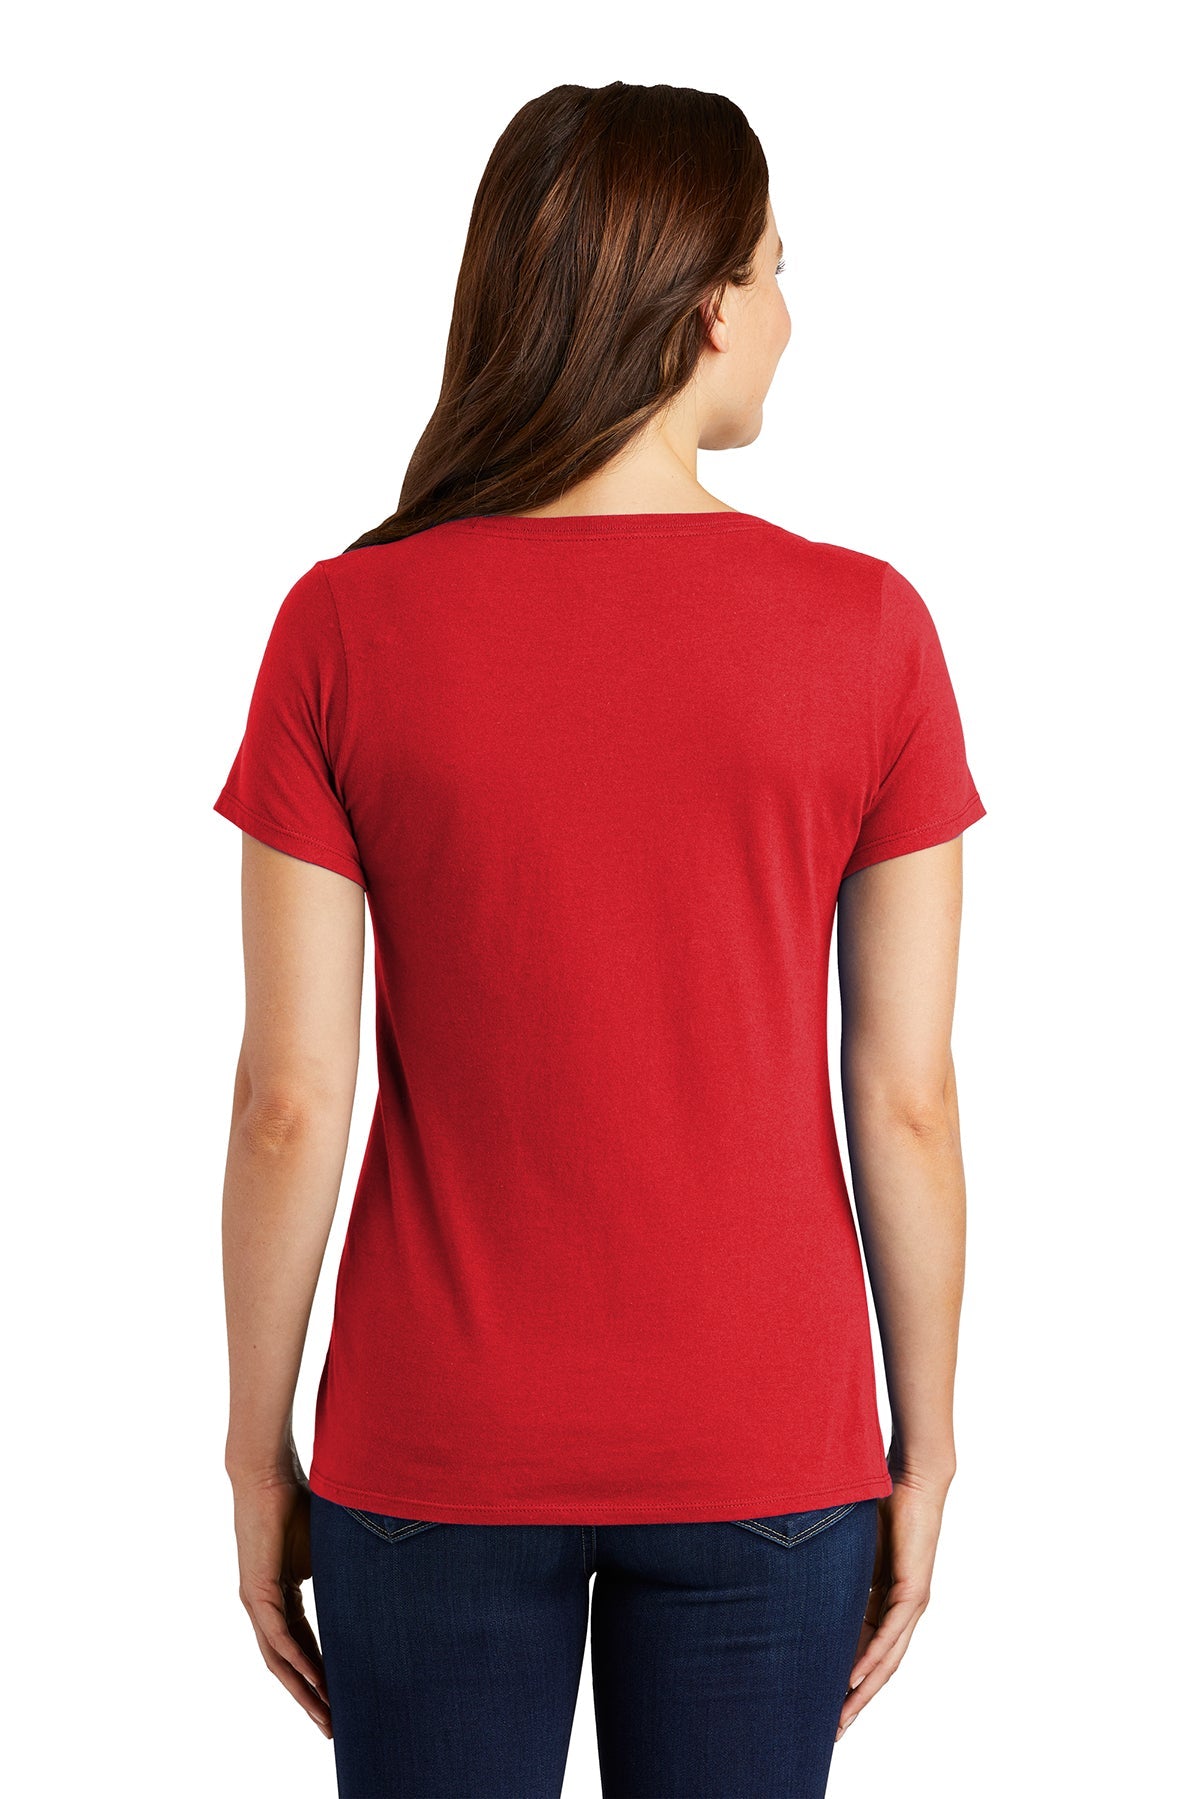 nike-ladies-dri-fit-cotton-poly-scoop-neck-tee-nkbq5234-university-red